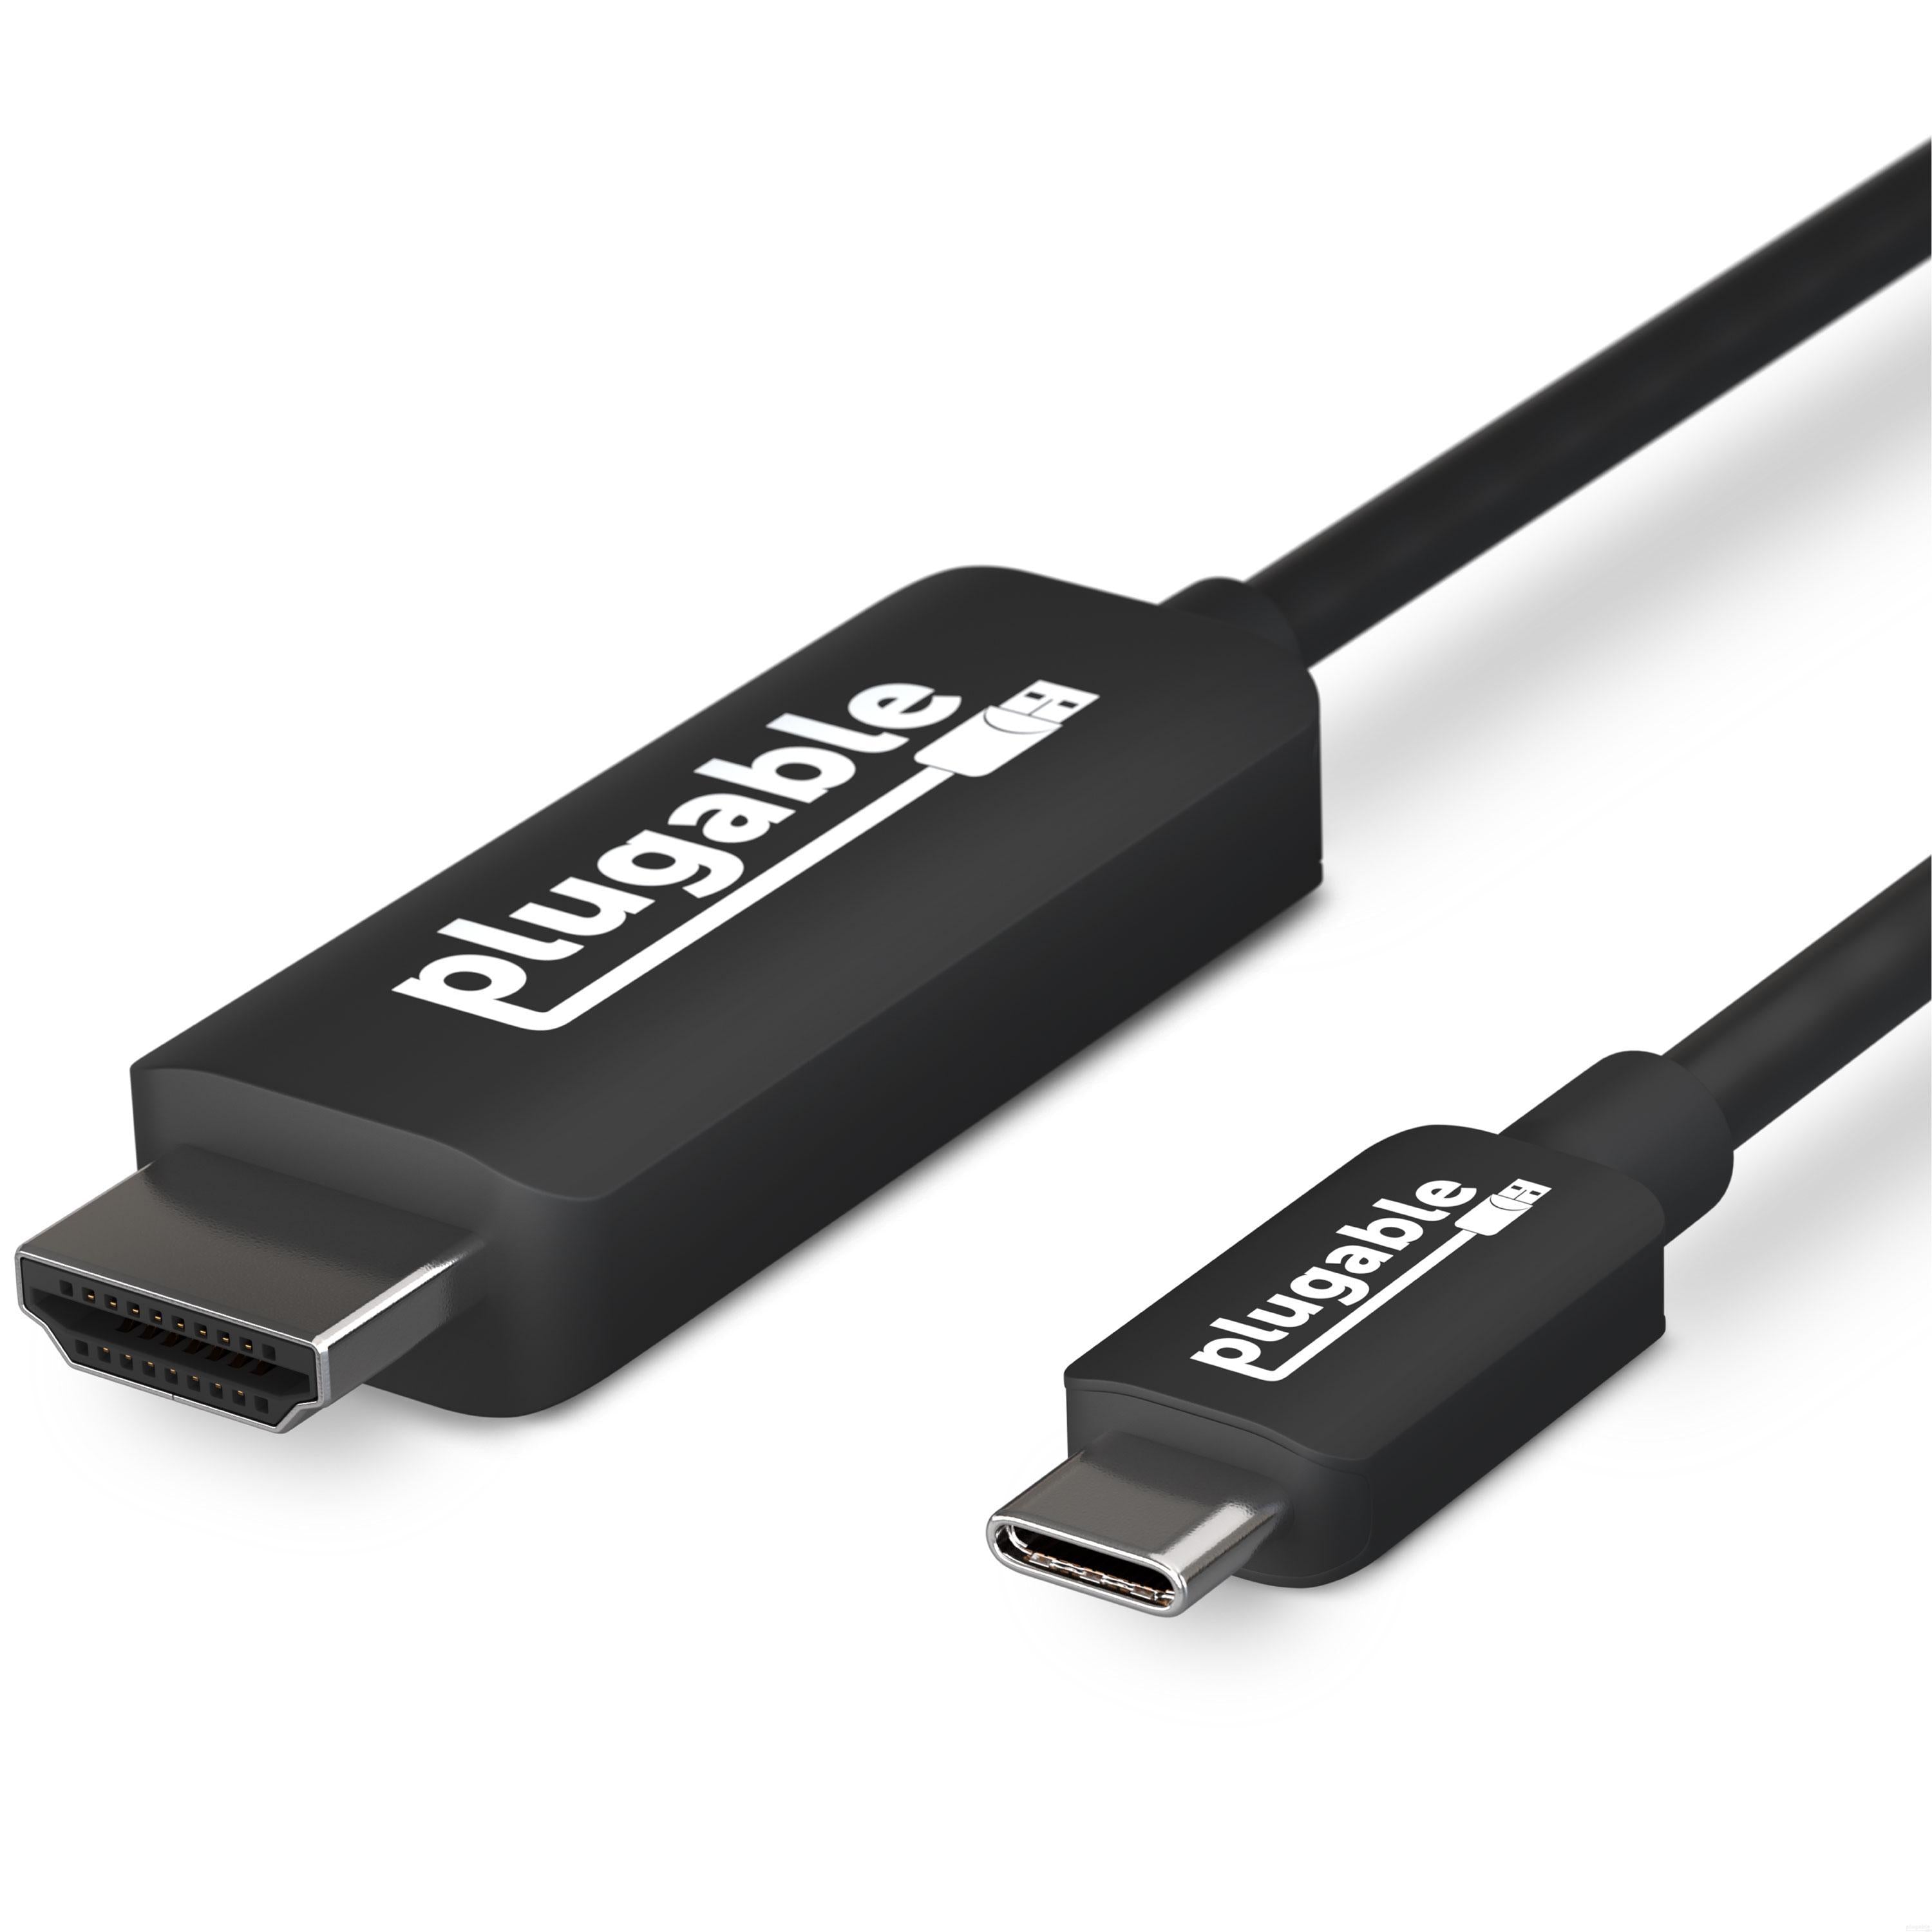 Plugable USB 3.1 Type-C to HDMI Cable – Plugable Technologies